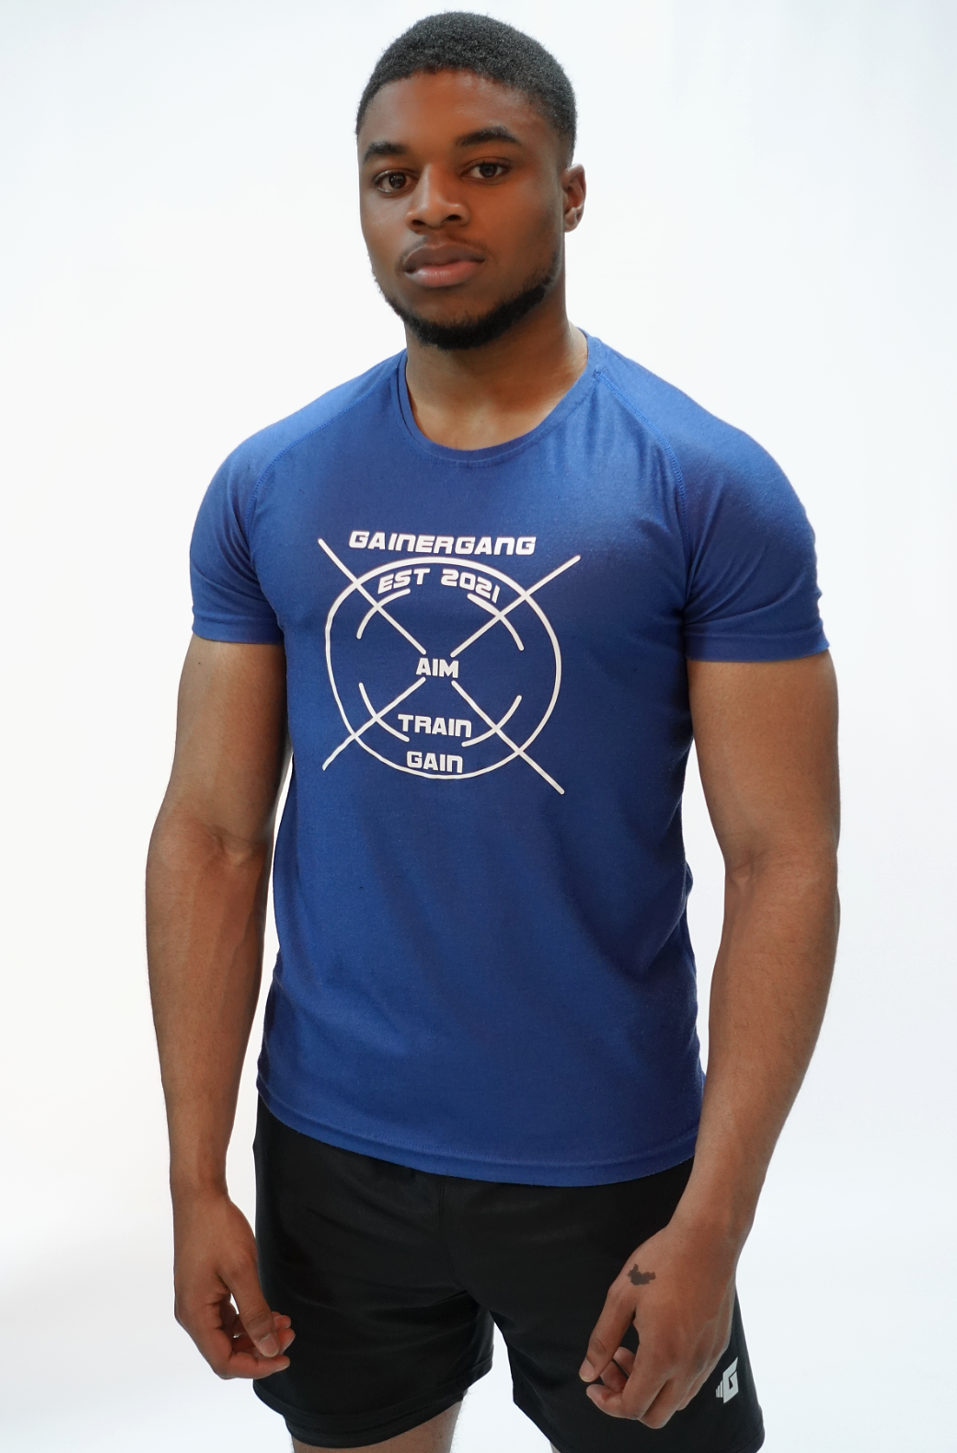 Men's Exordium Aim-Marker T-Shirt - Blue Horizon